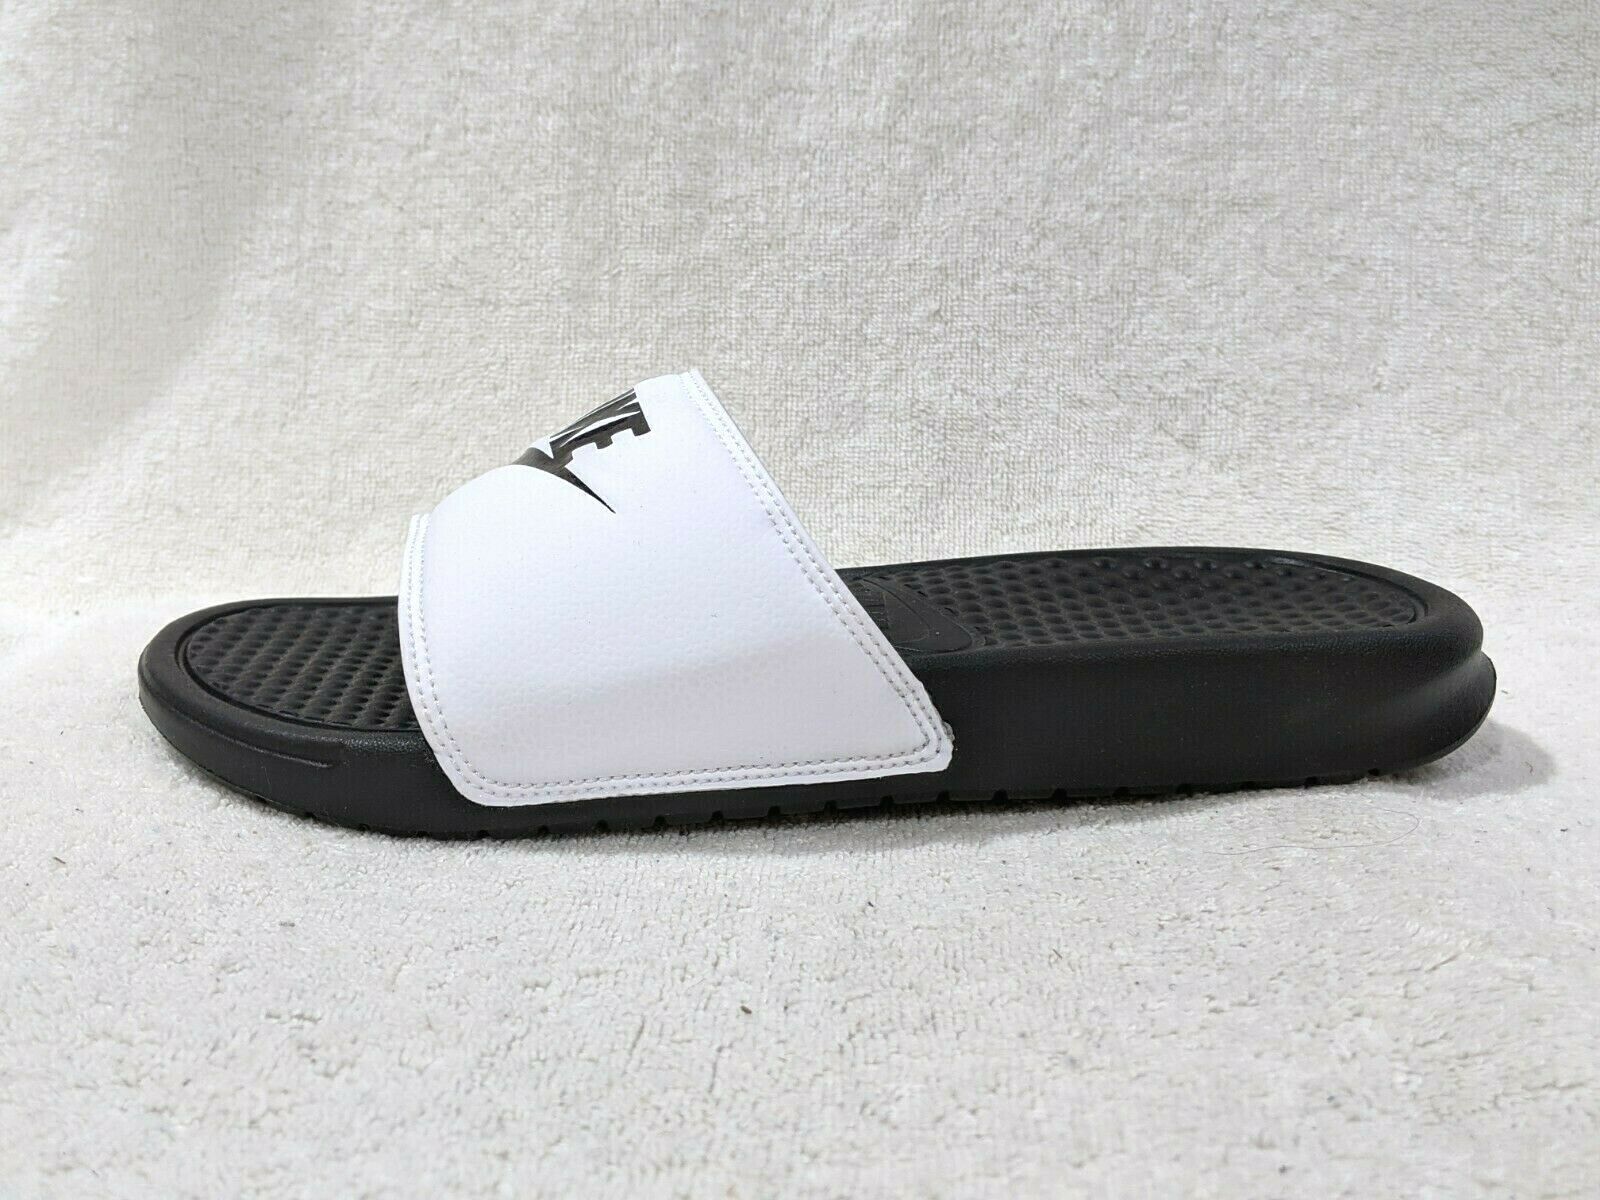 Nike Benassi JDI Just Do It Slides Sandals White Black Size 12 343880 100 Online